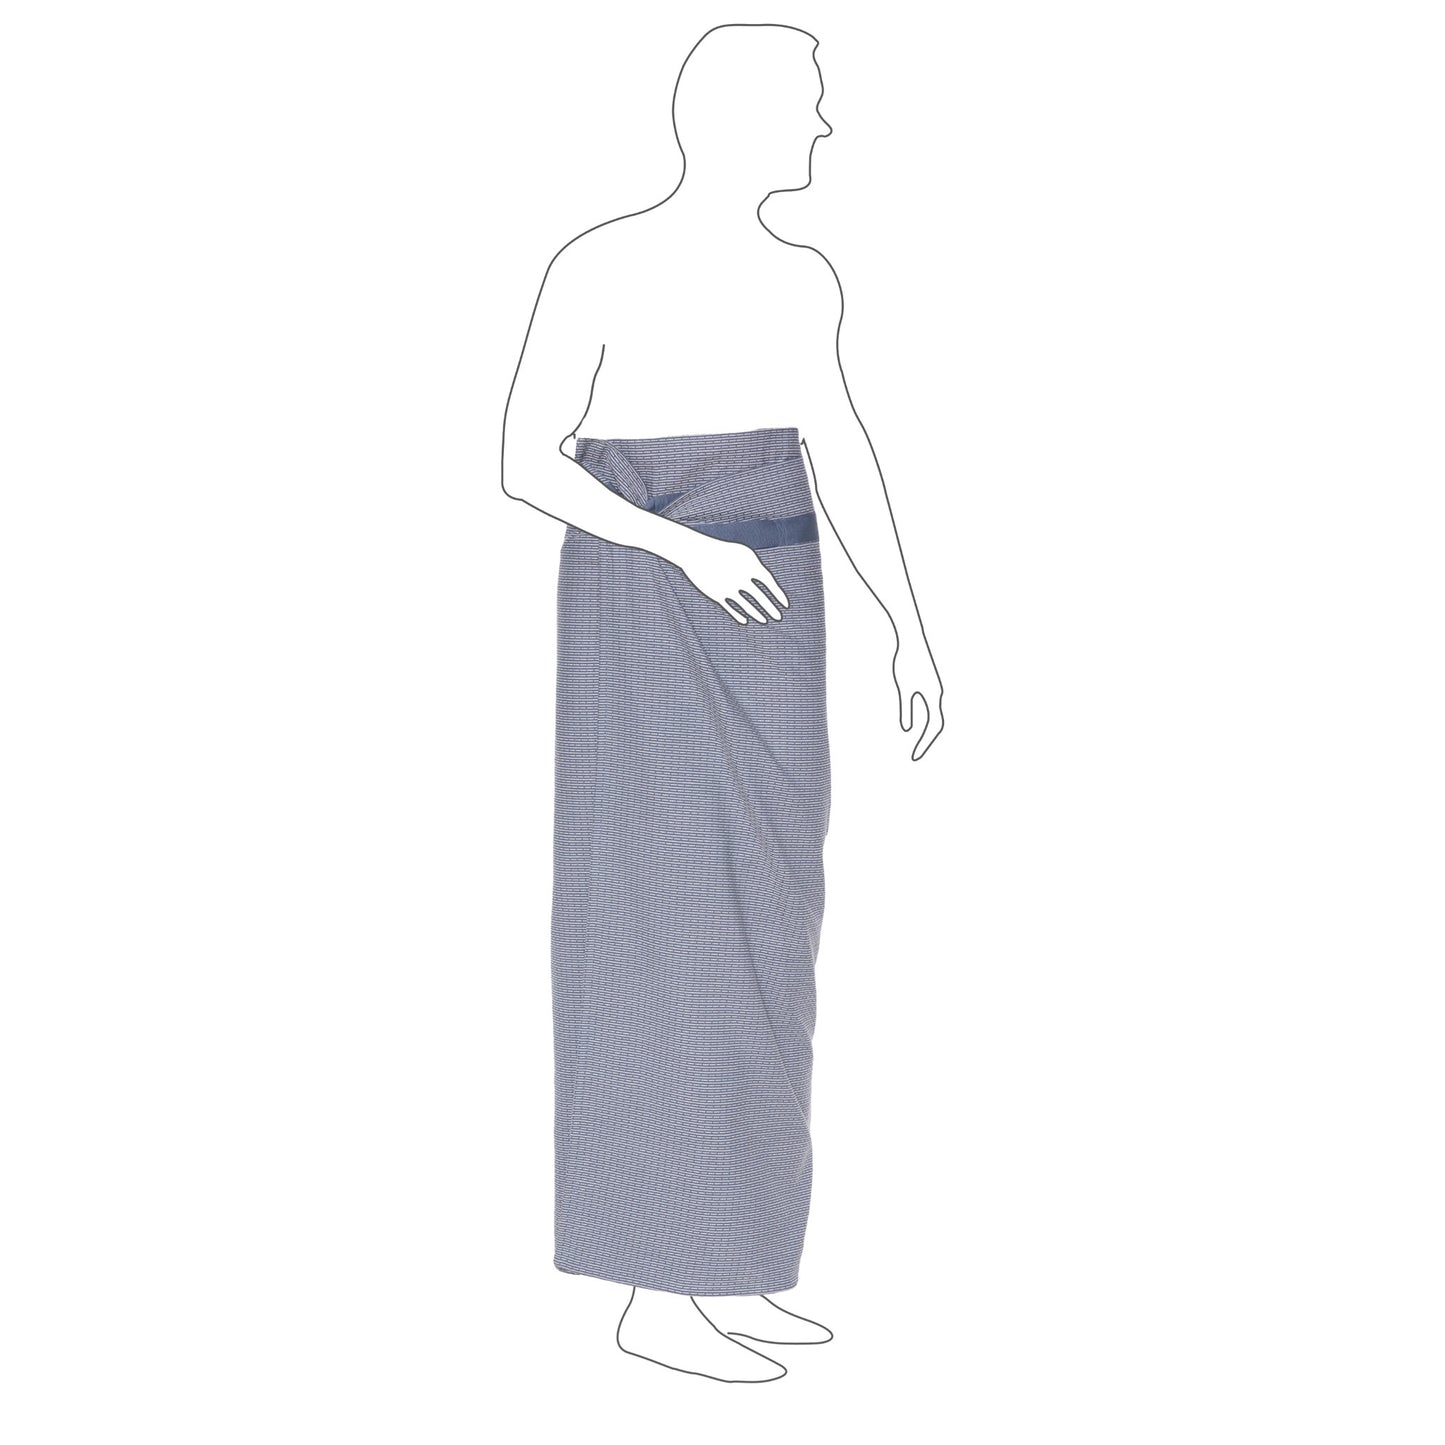 Wellness Towel - Grey Blue Stone